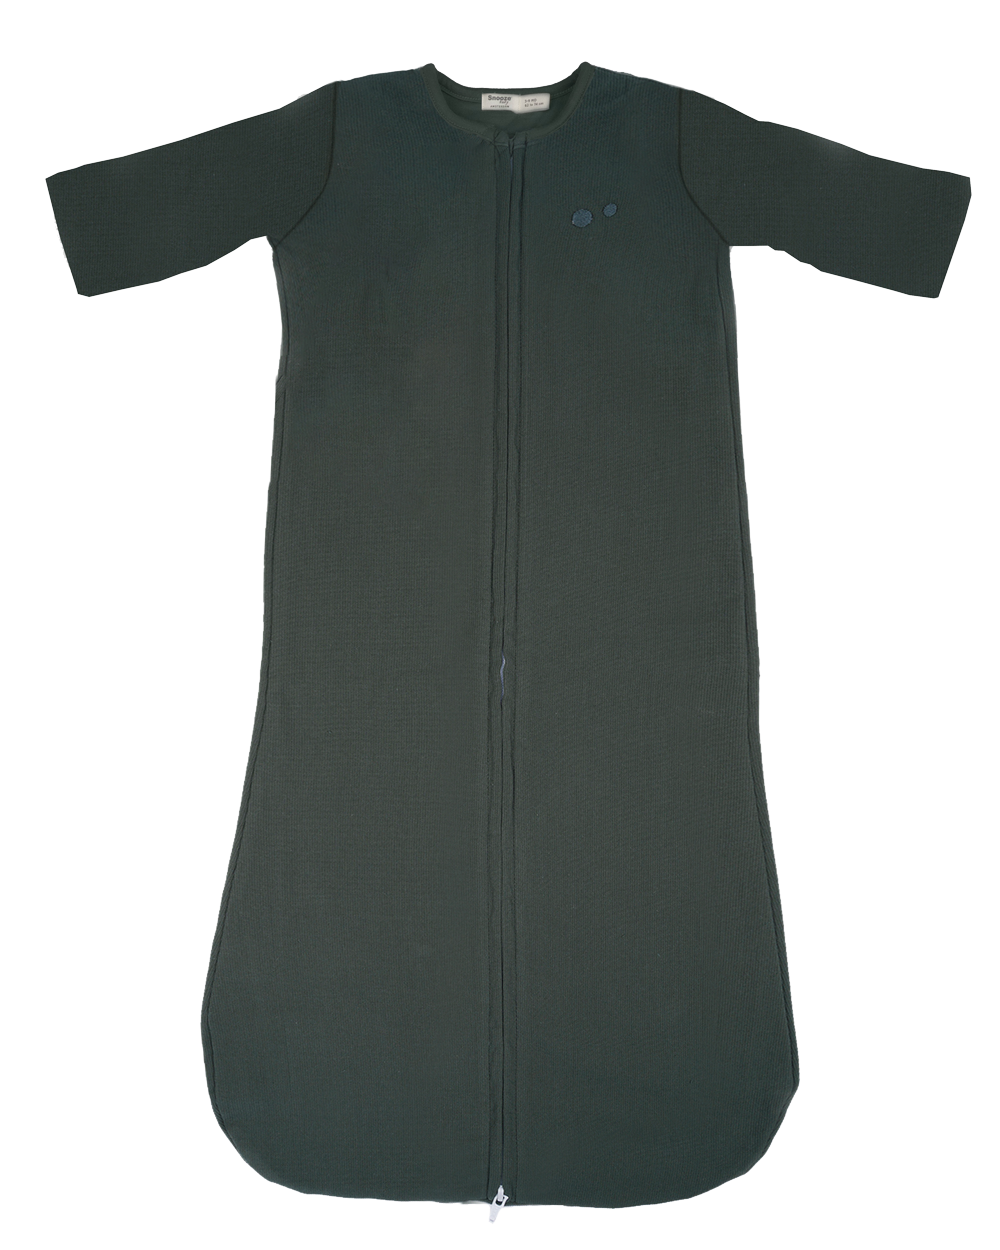 ORGANIC 4-season sleepsuit TOG 3.0 Dark Green